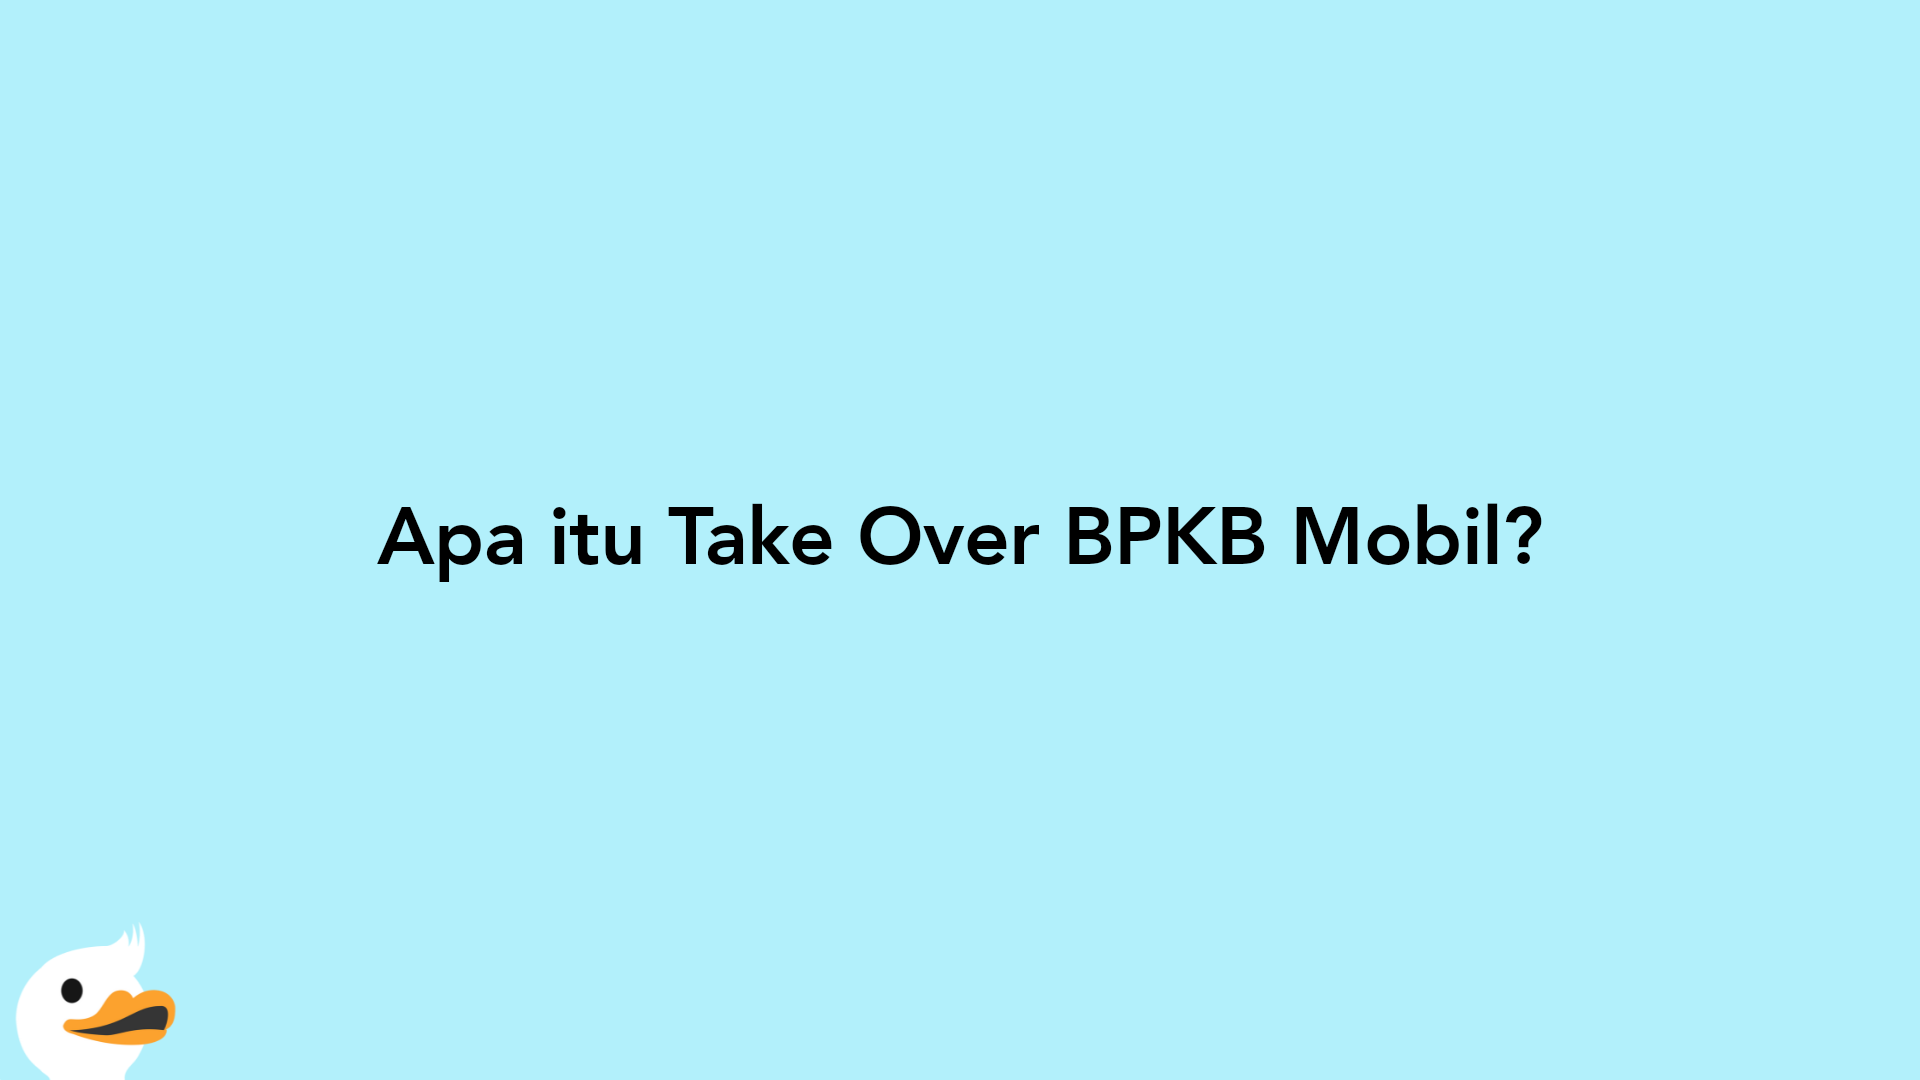 Apa itu Take Over BPKB Mobil?